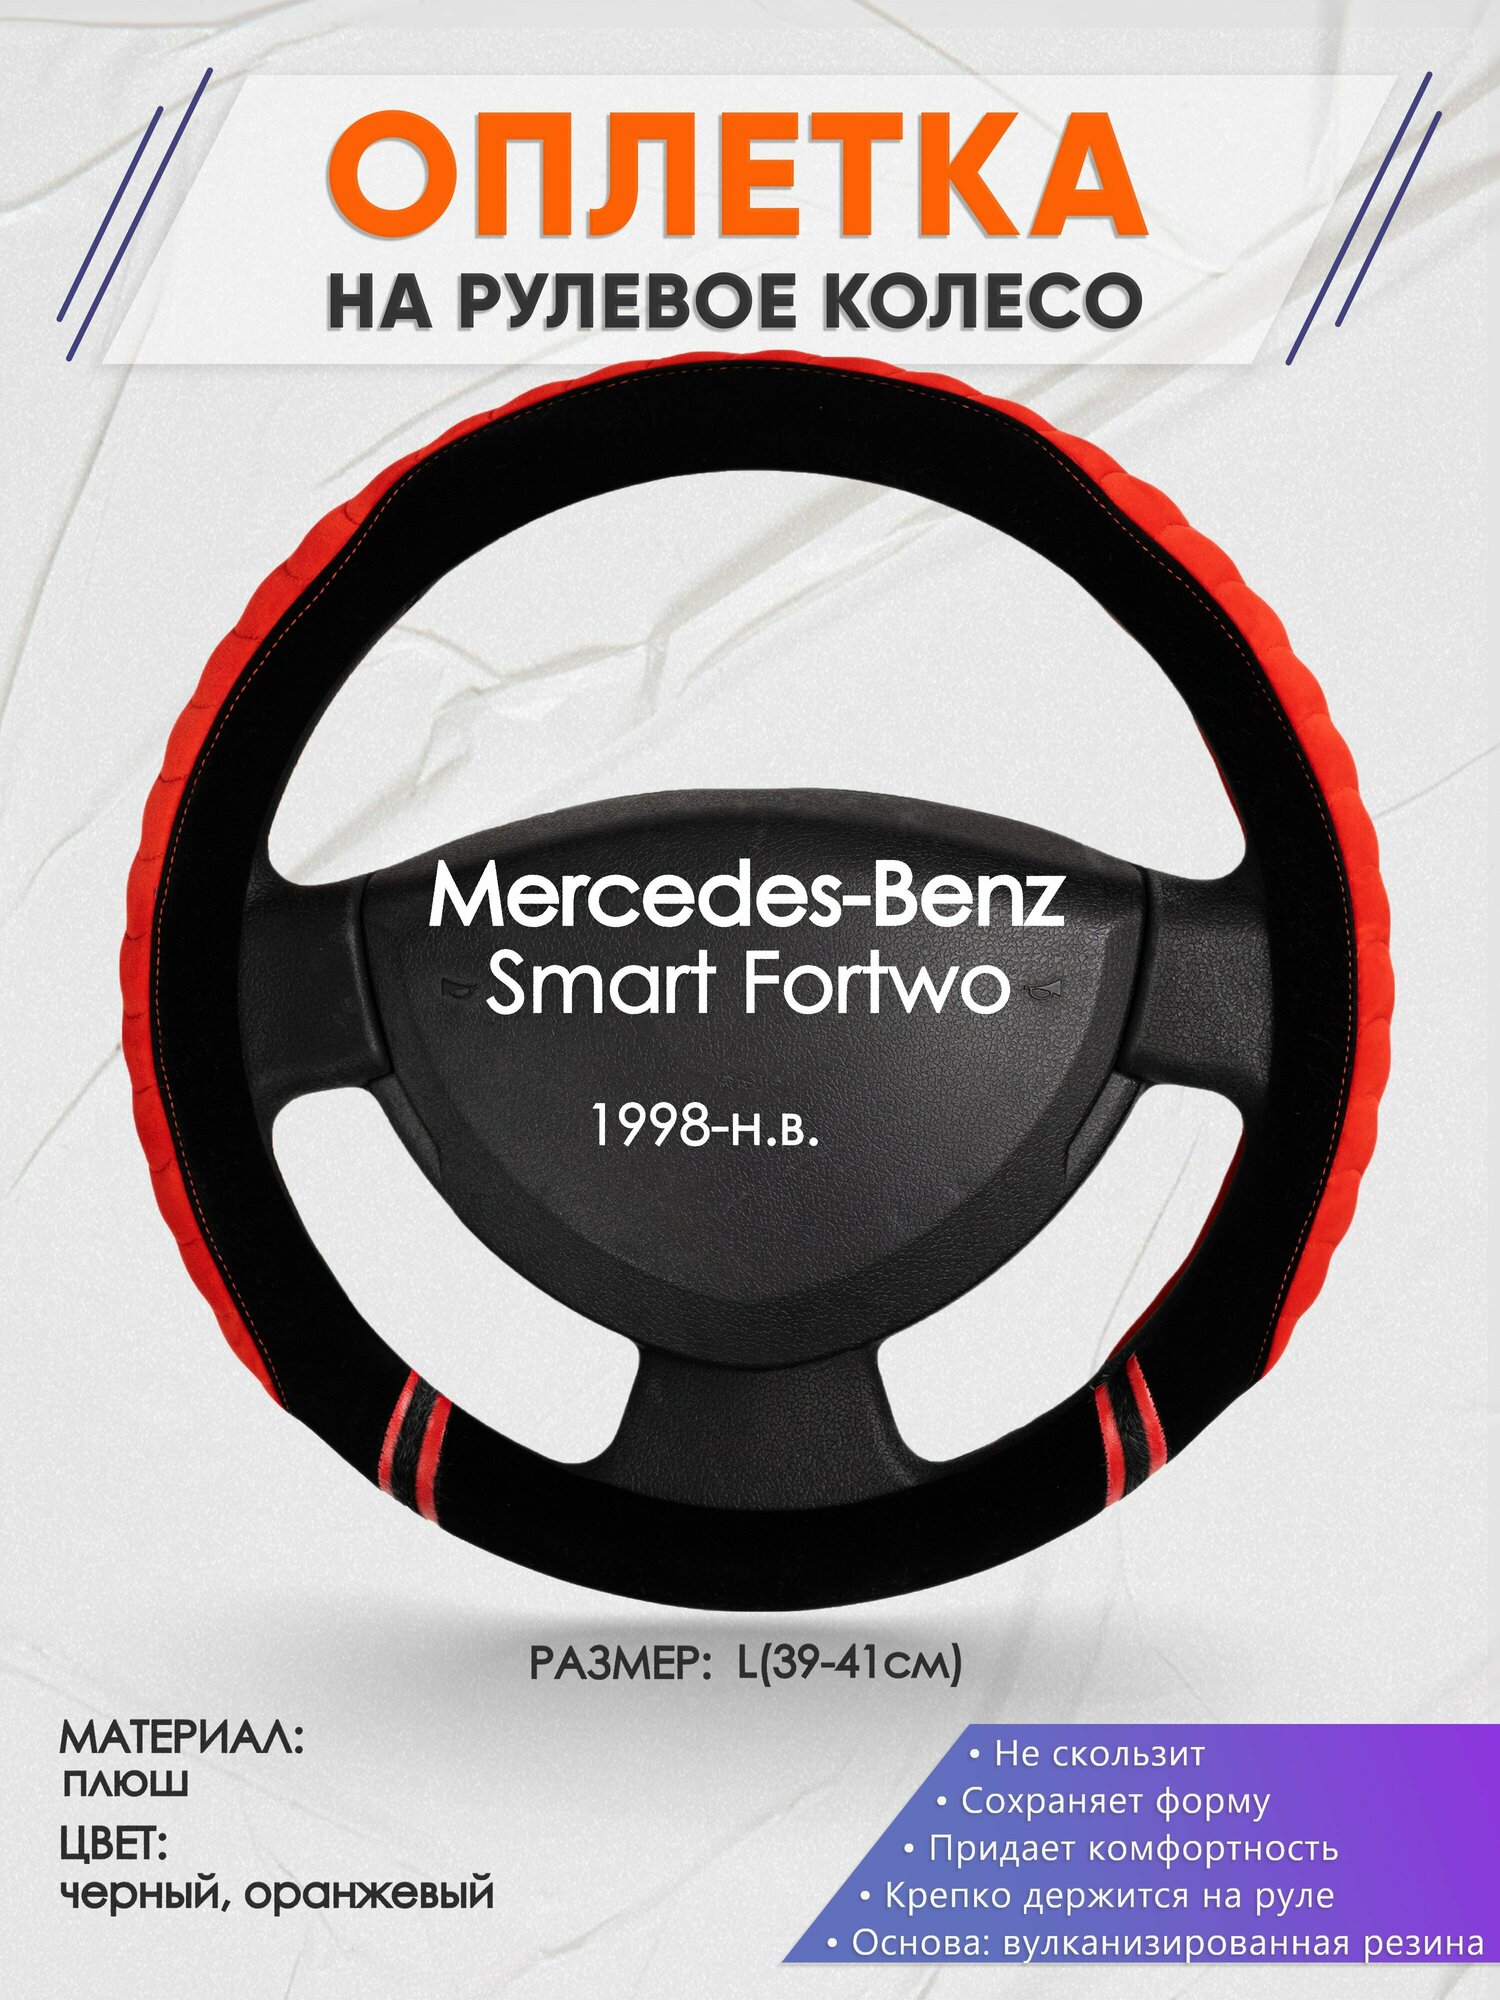 Оплетка на руль для Mercedes-Benz Smart Fortwo(Мерседес Бенц Смарт Форту) 1998-н. в, L(39-41см), Замша 36